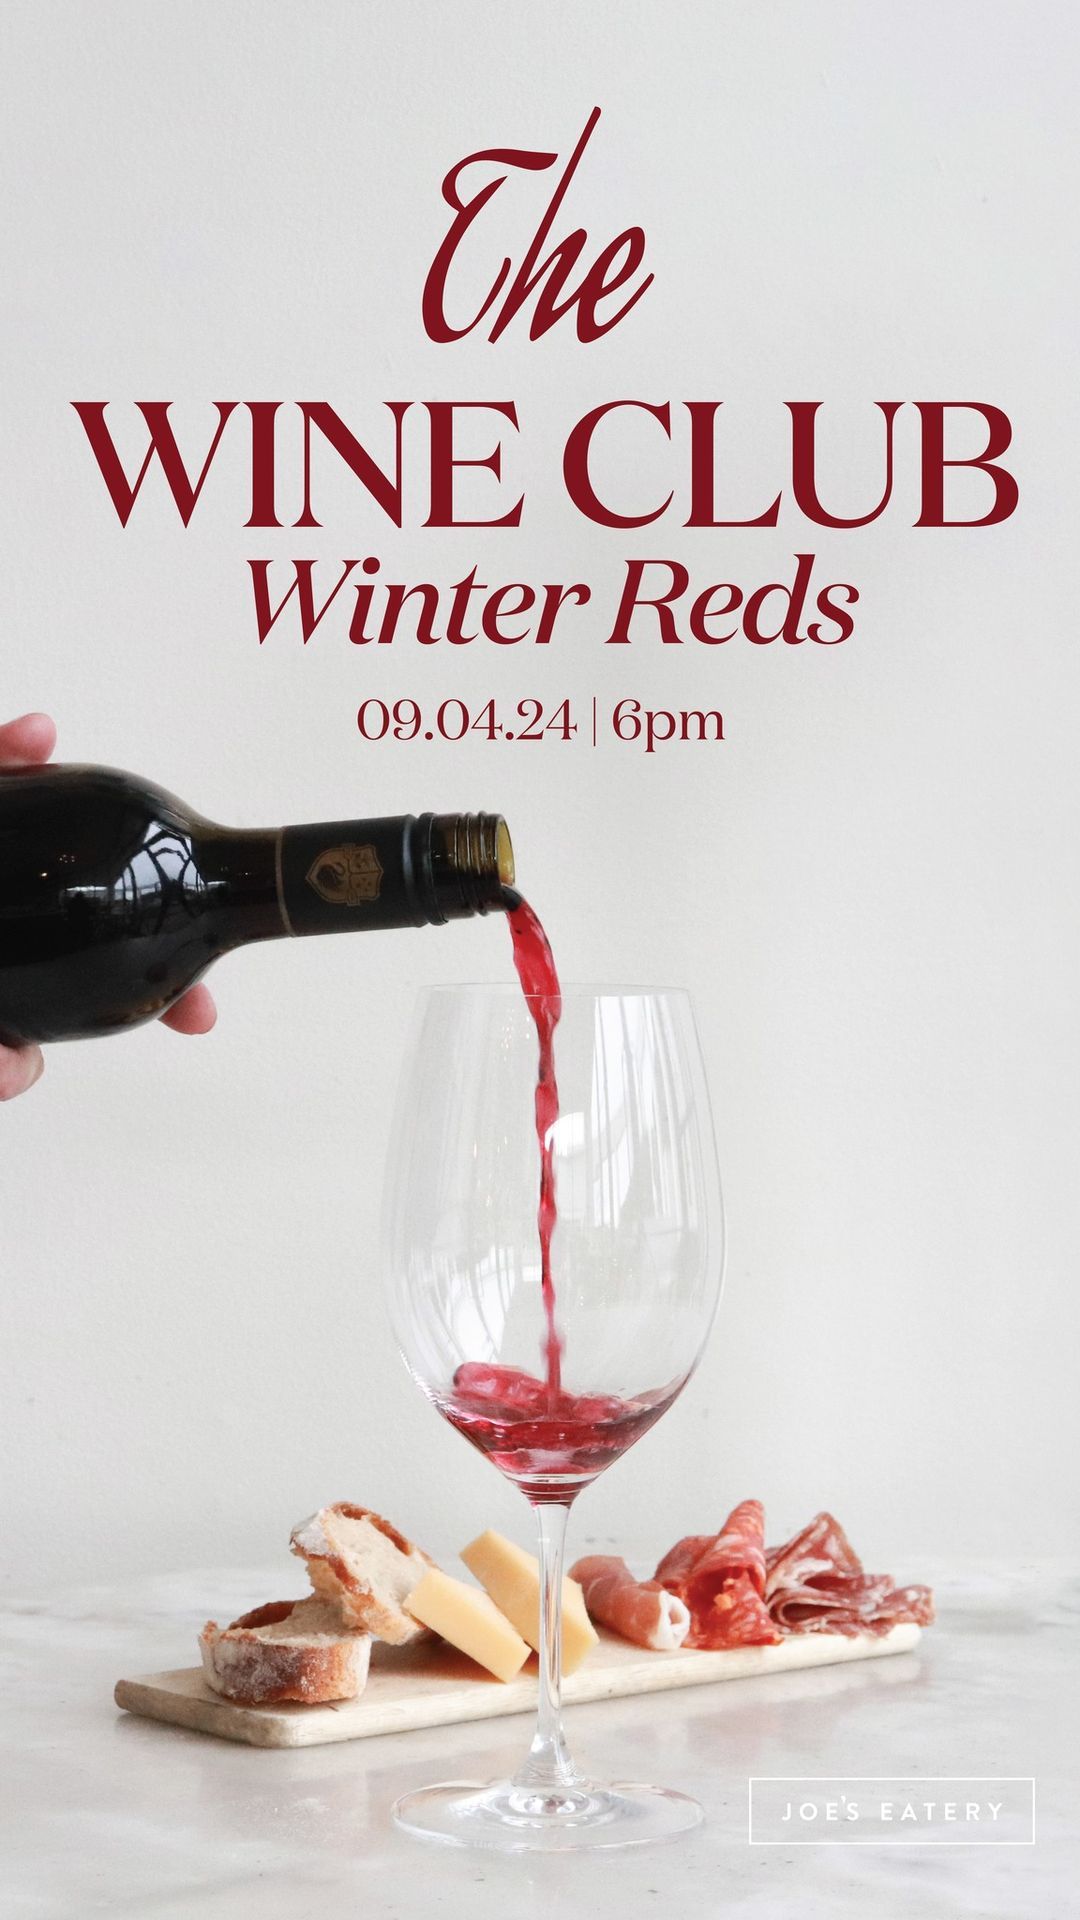 The Wine Club Winter Reds